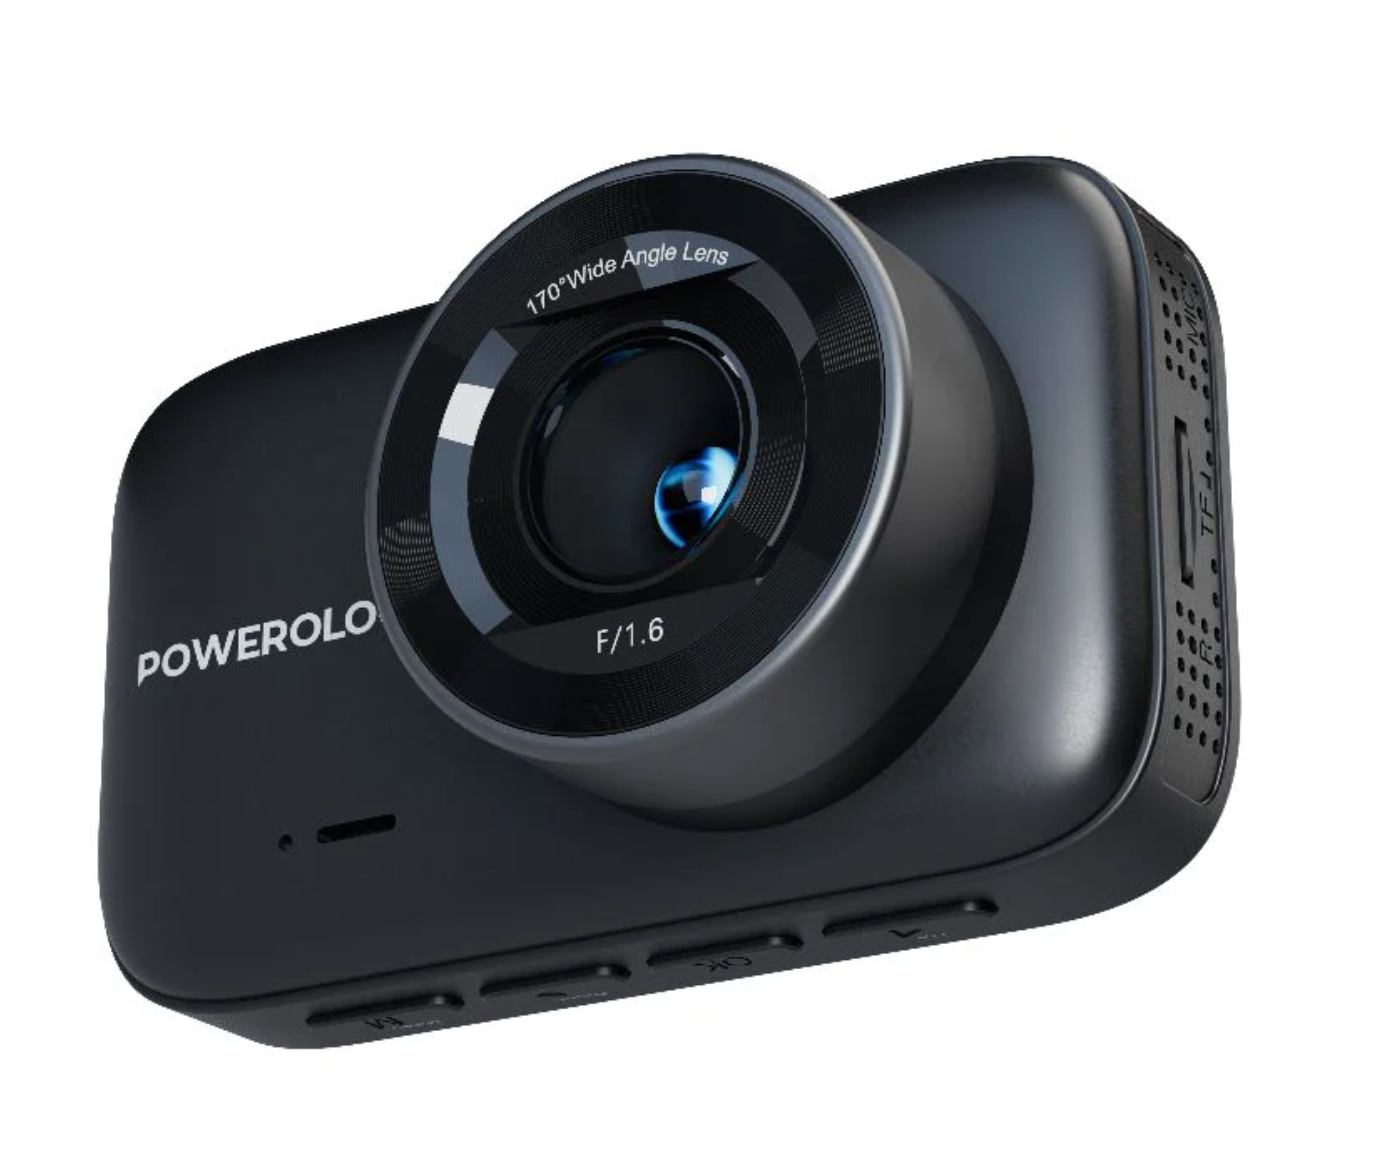 Powerology Dash Camera Ultra with High Utility Built-In Sensors 4K - Black